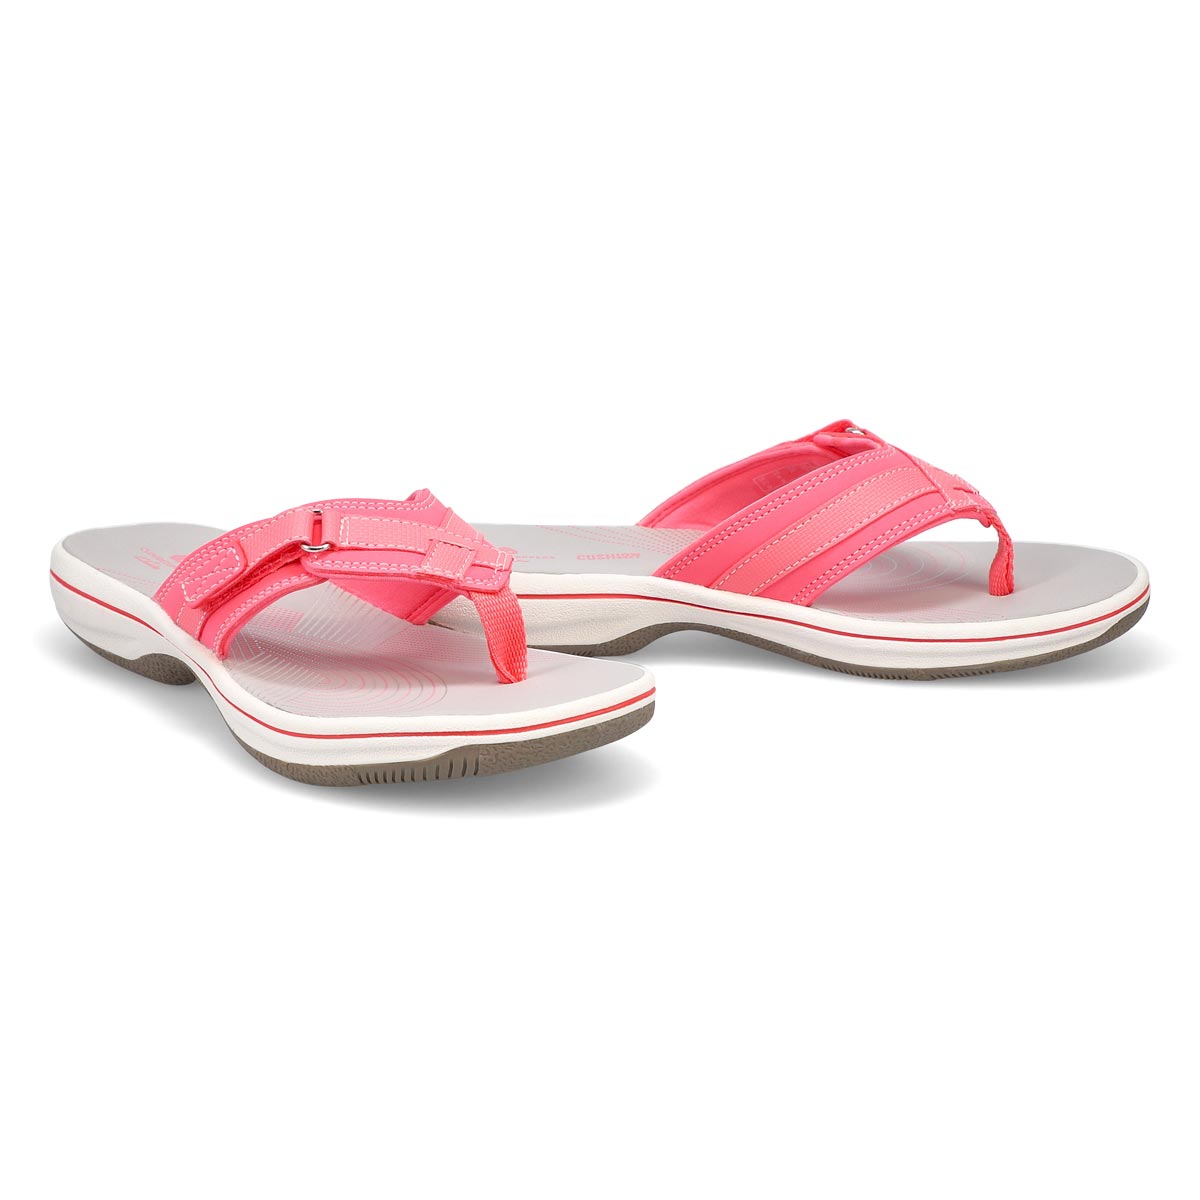 Women's Breeze Sea Thong Sandal - Pink